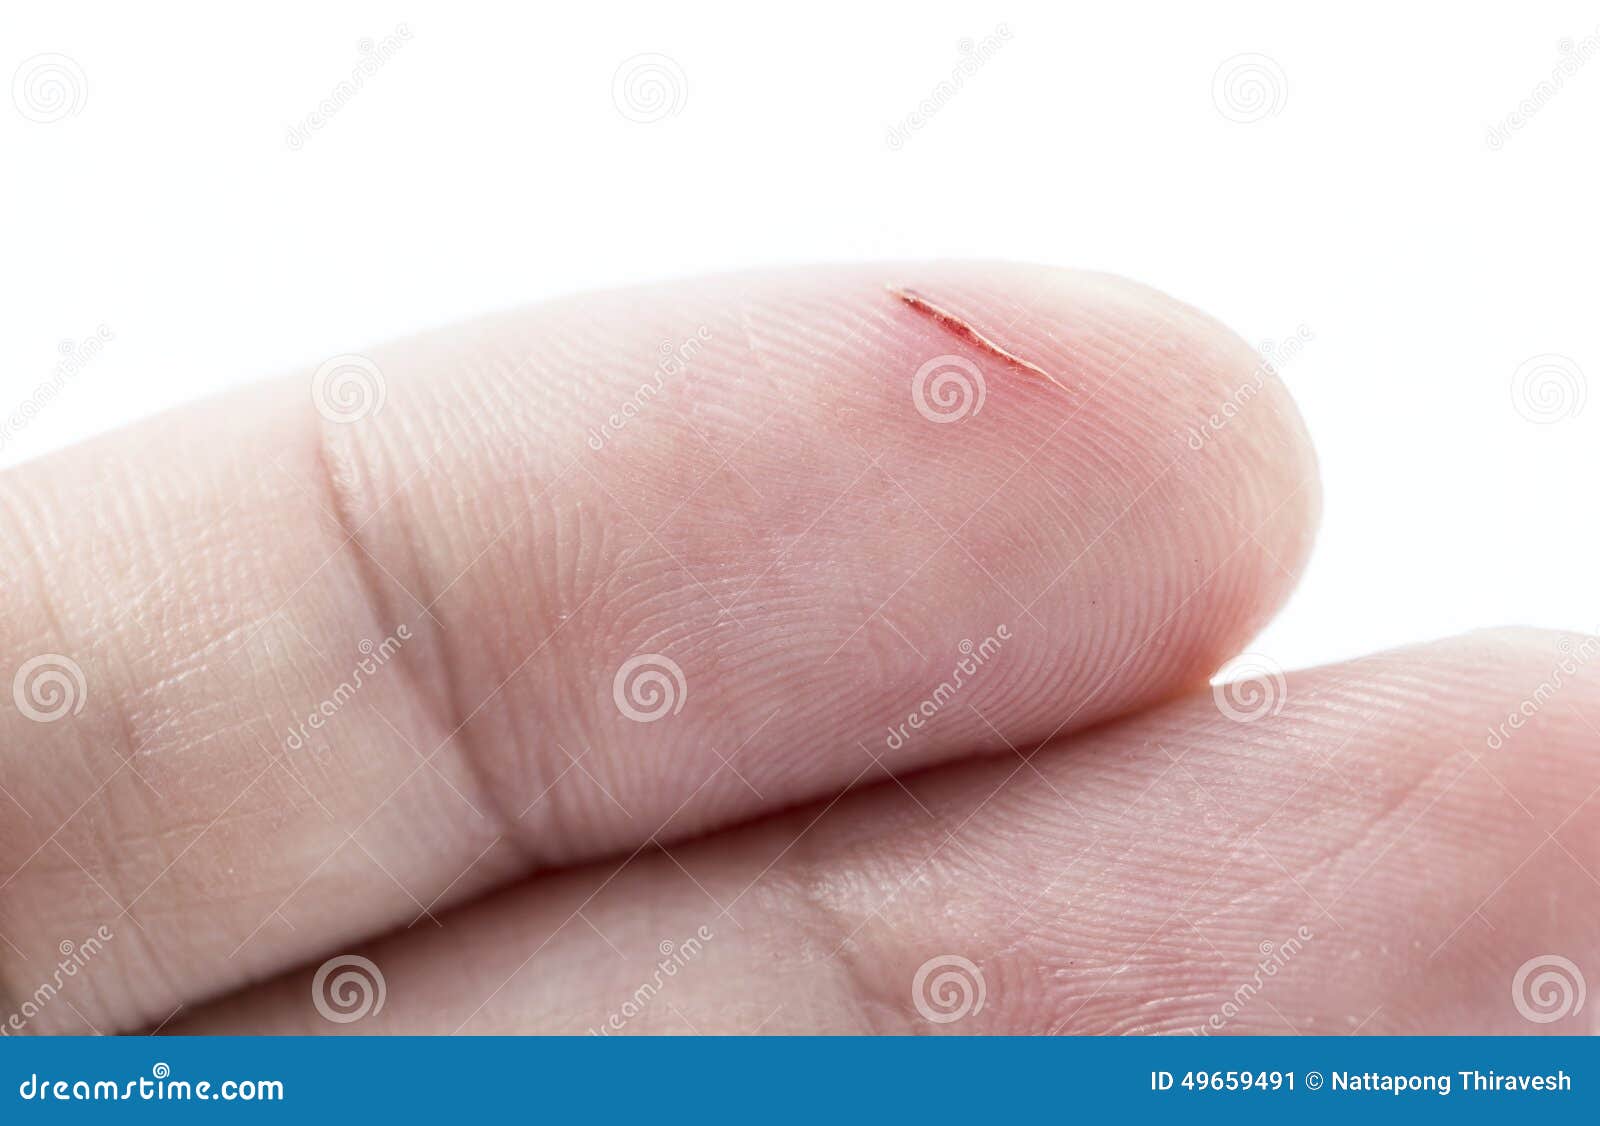 Injured Finger with Bloody Bandage Stock Image - Image of body, hand: 44081865